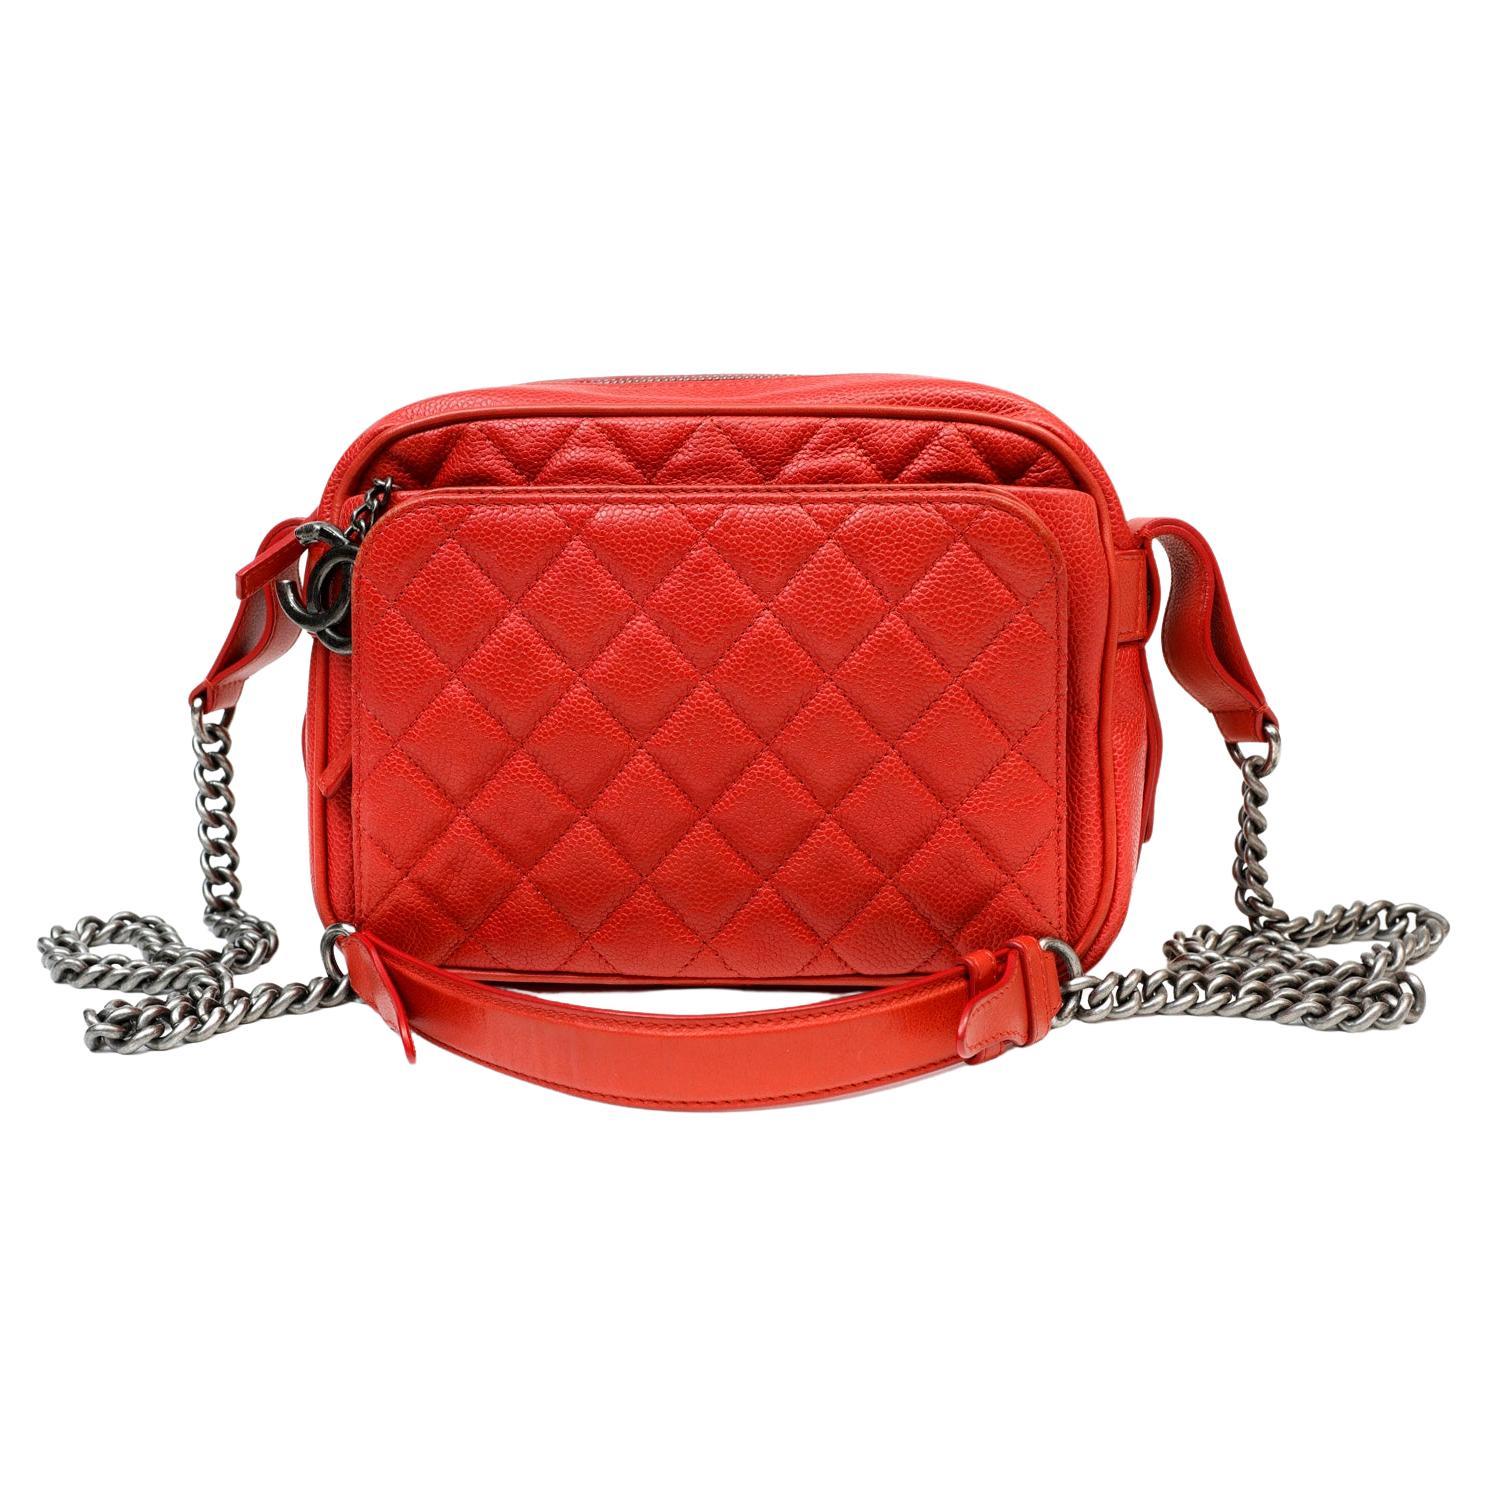 Chanel Red Caviar Leather Crossbody Bag